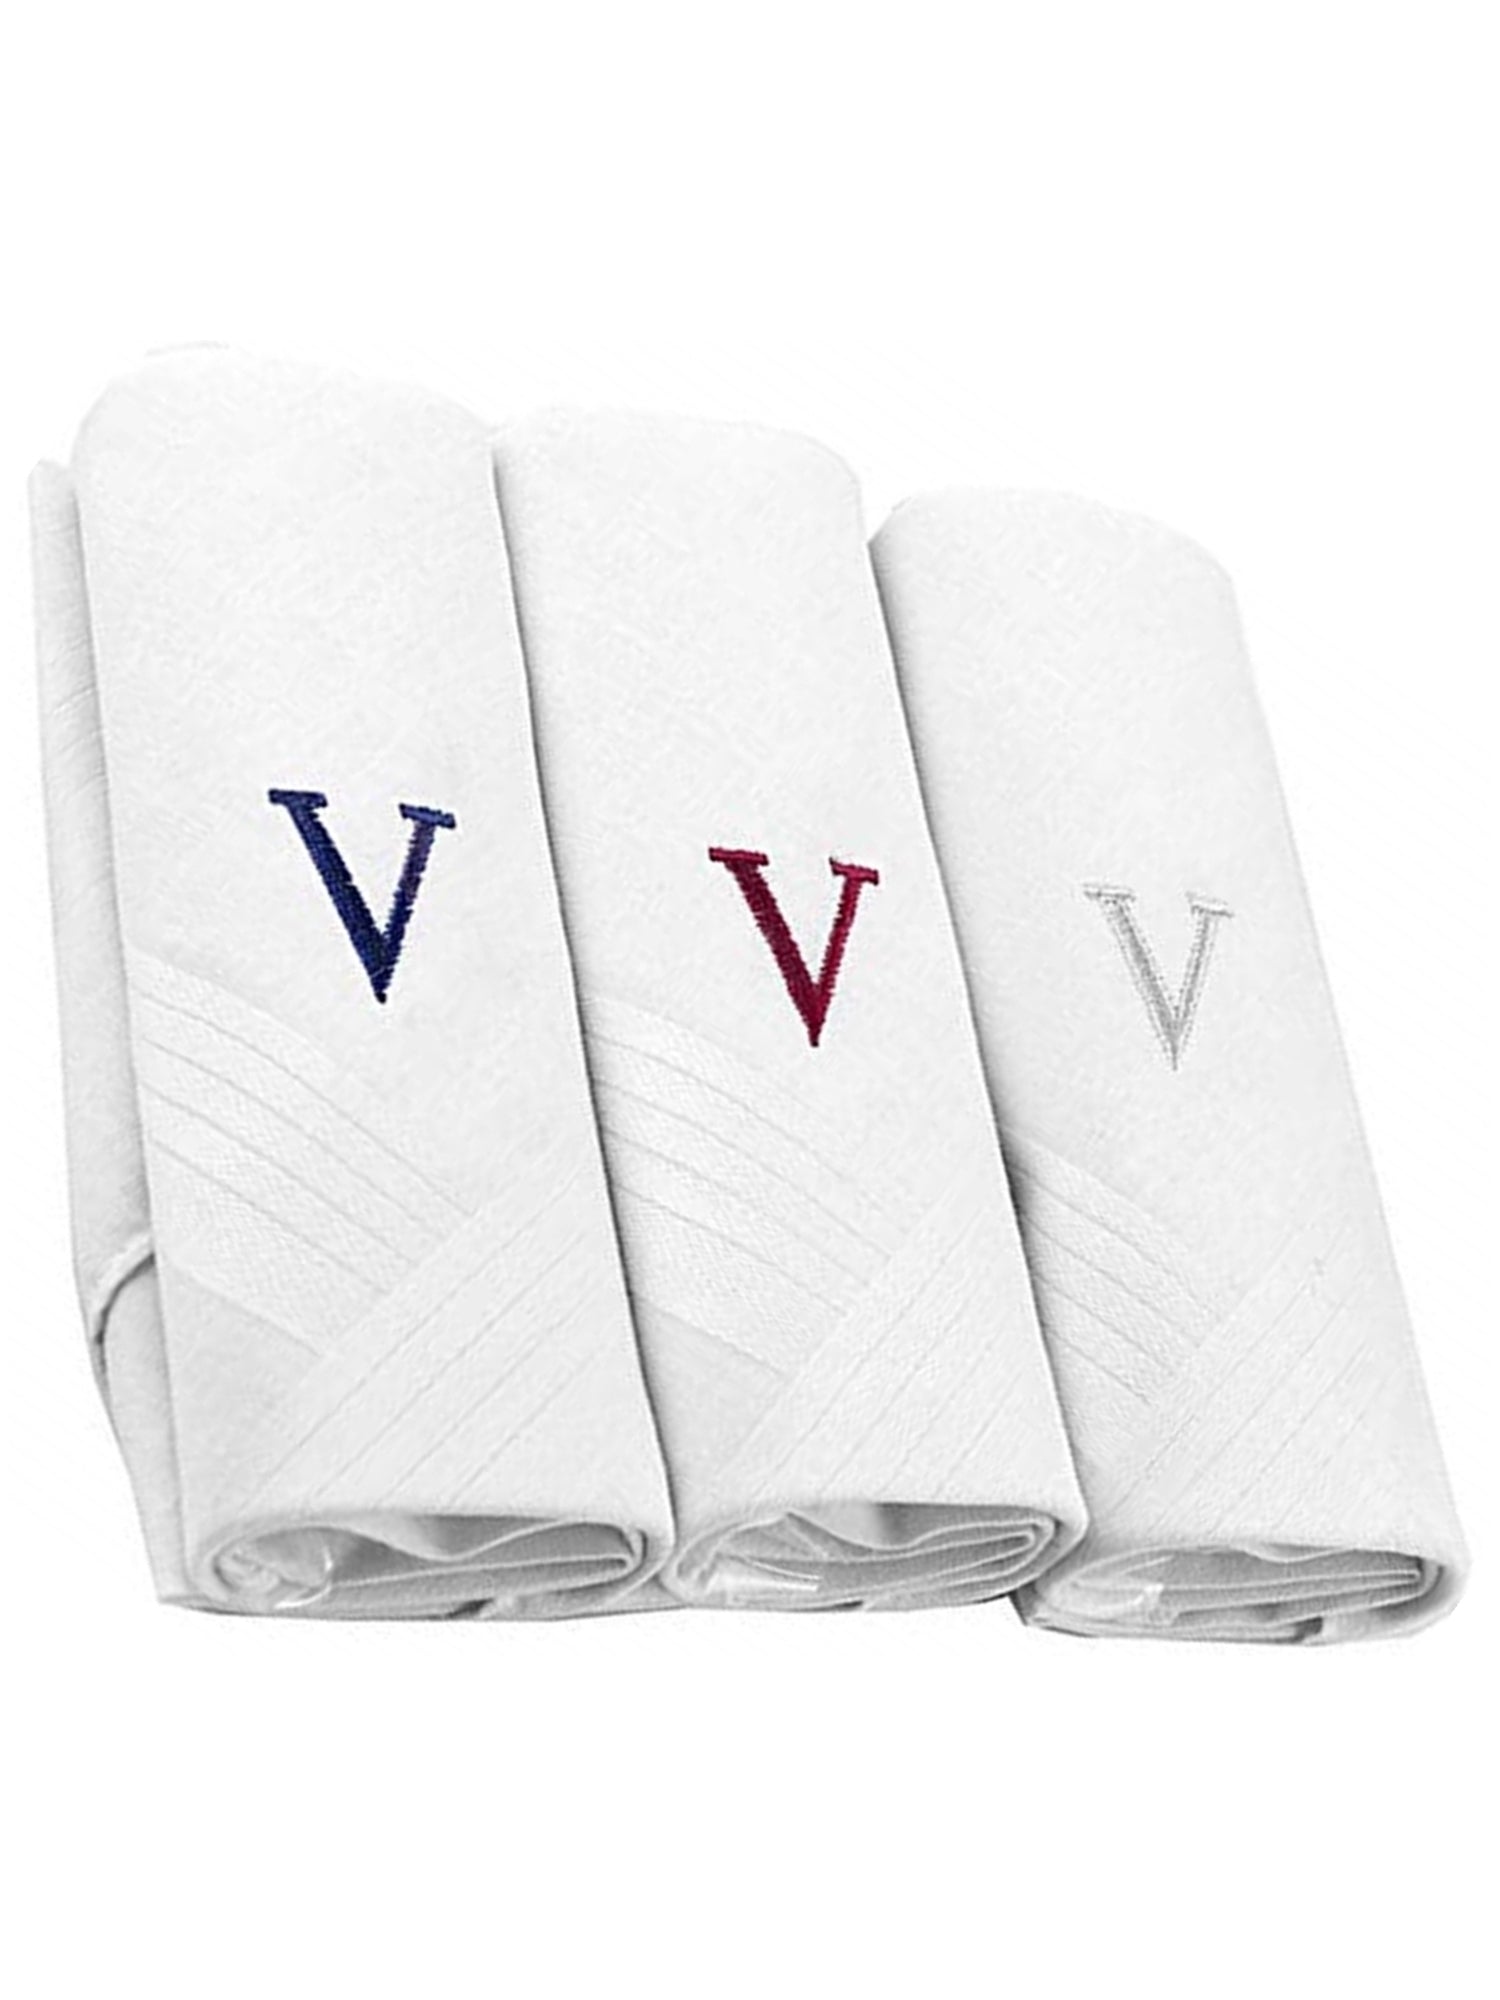 Men's Cotton Monogrammed Handkerchiefs Initial Letter Hanky Handkerchiefs TheDapperTie White V 2 x 3 Pack  